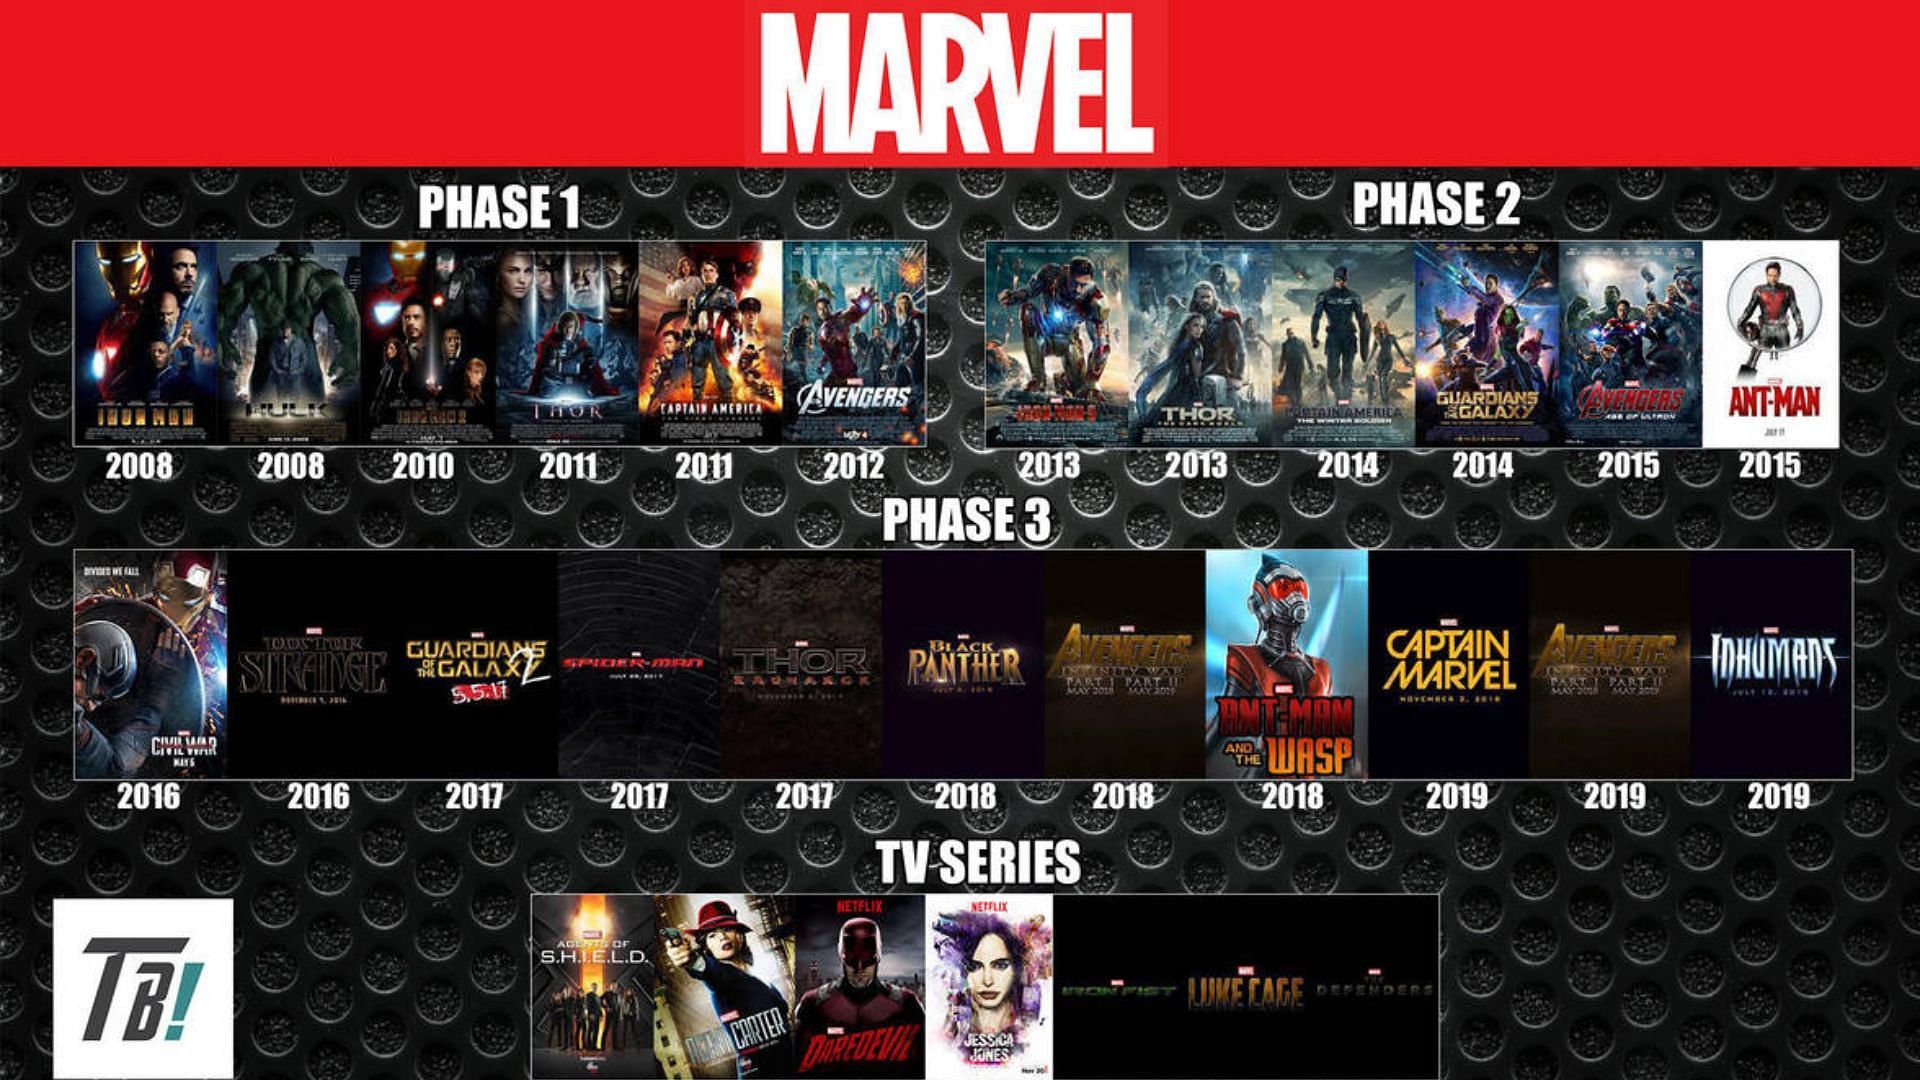 Marvel Cinematic Universe Phase One chronological watch order explained